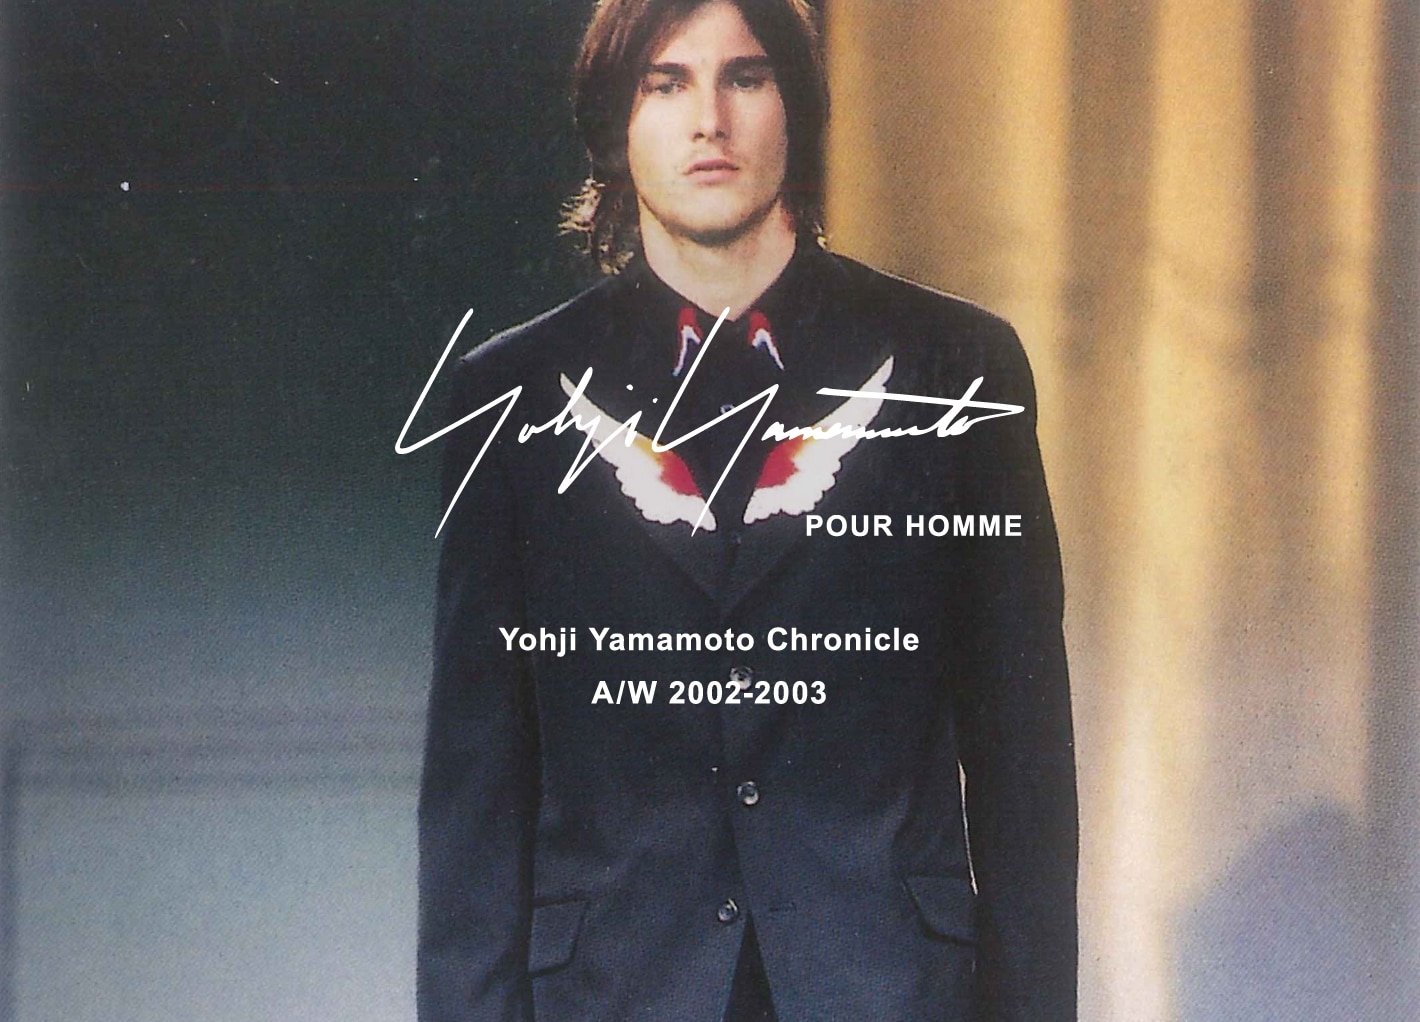 Yohji Yamamoto Chronicle – POUR HOMME A/W 2002-2003 | Yohji 